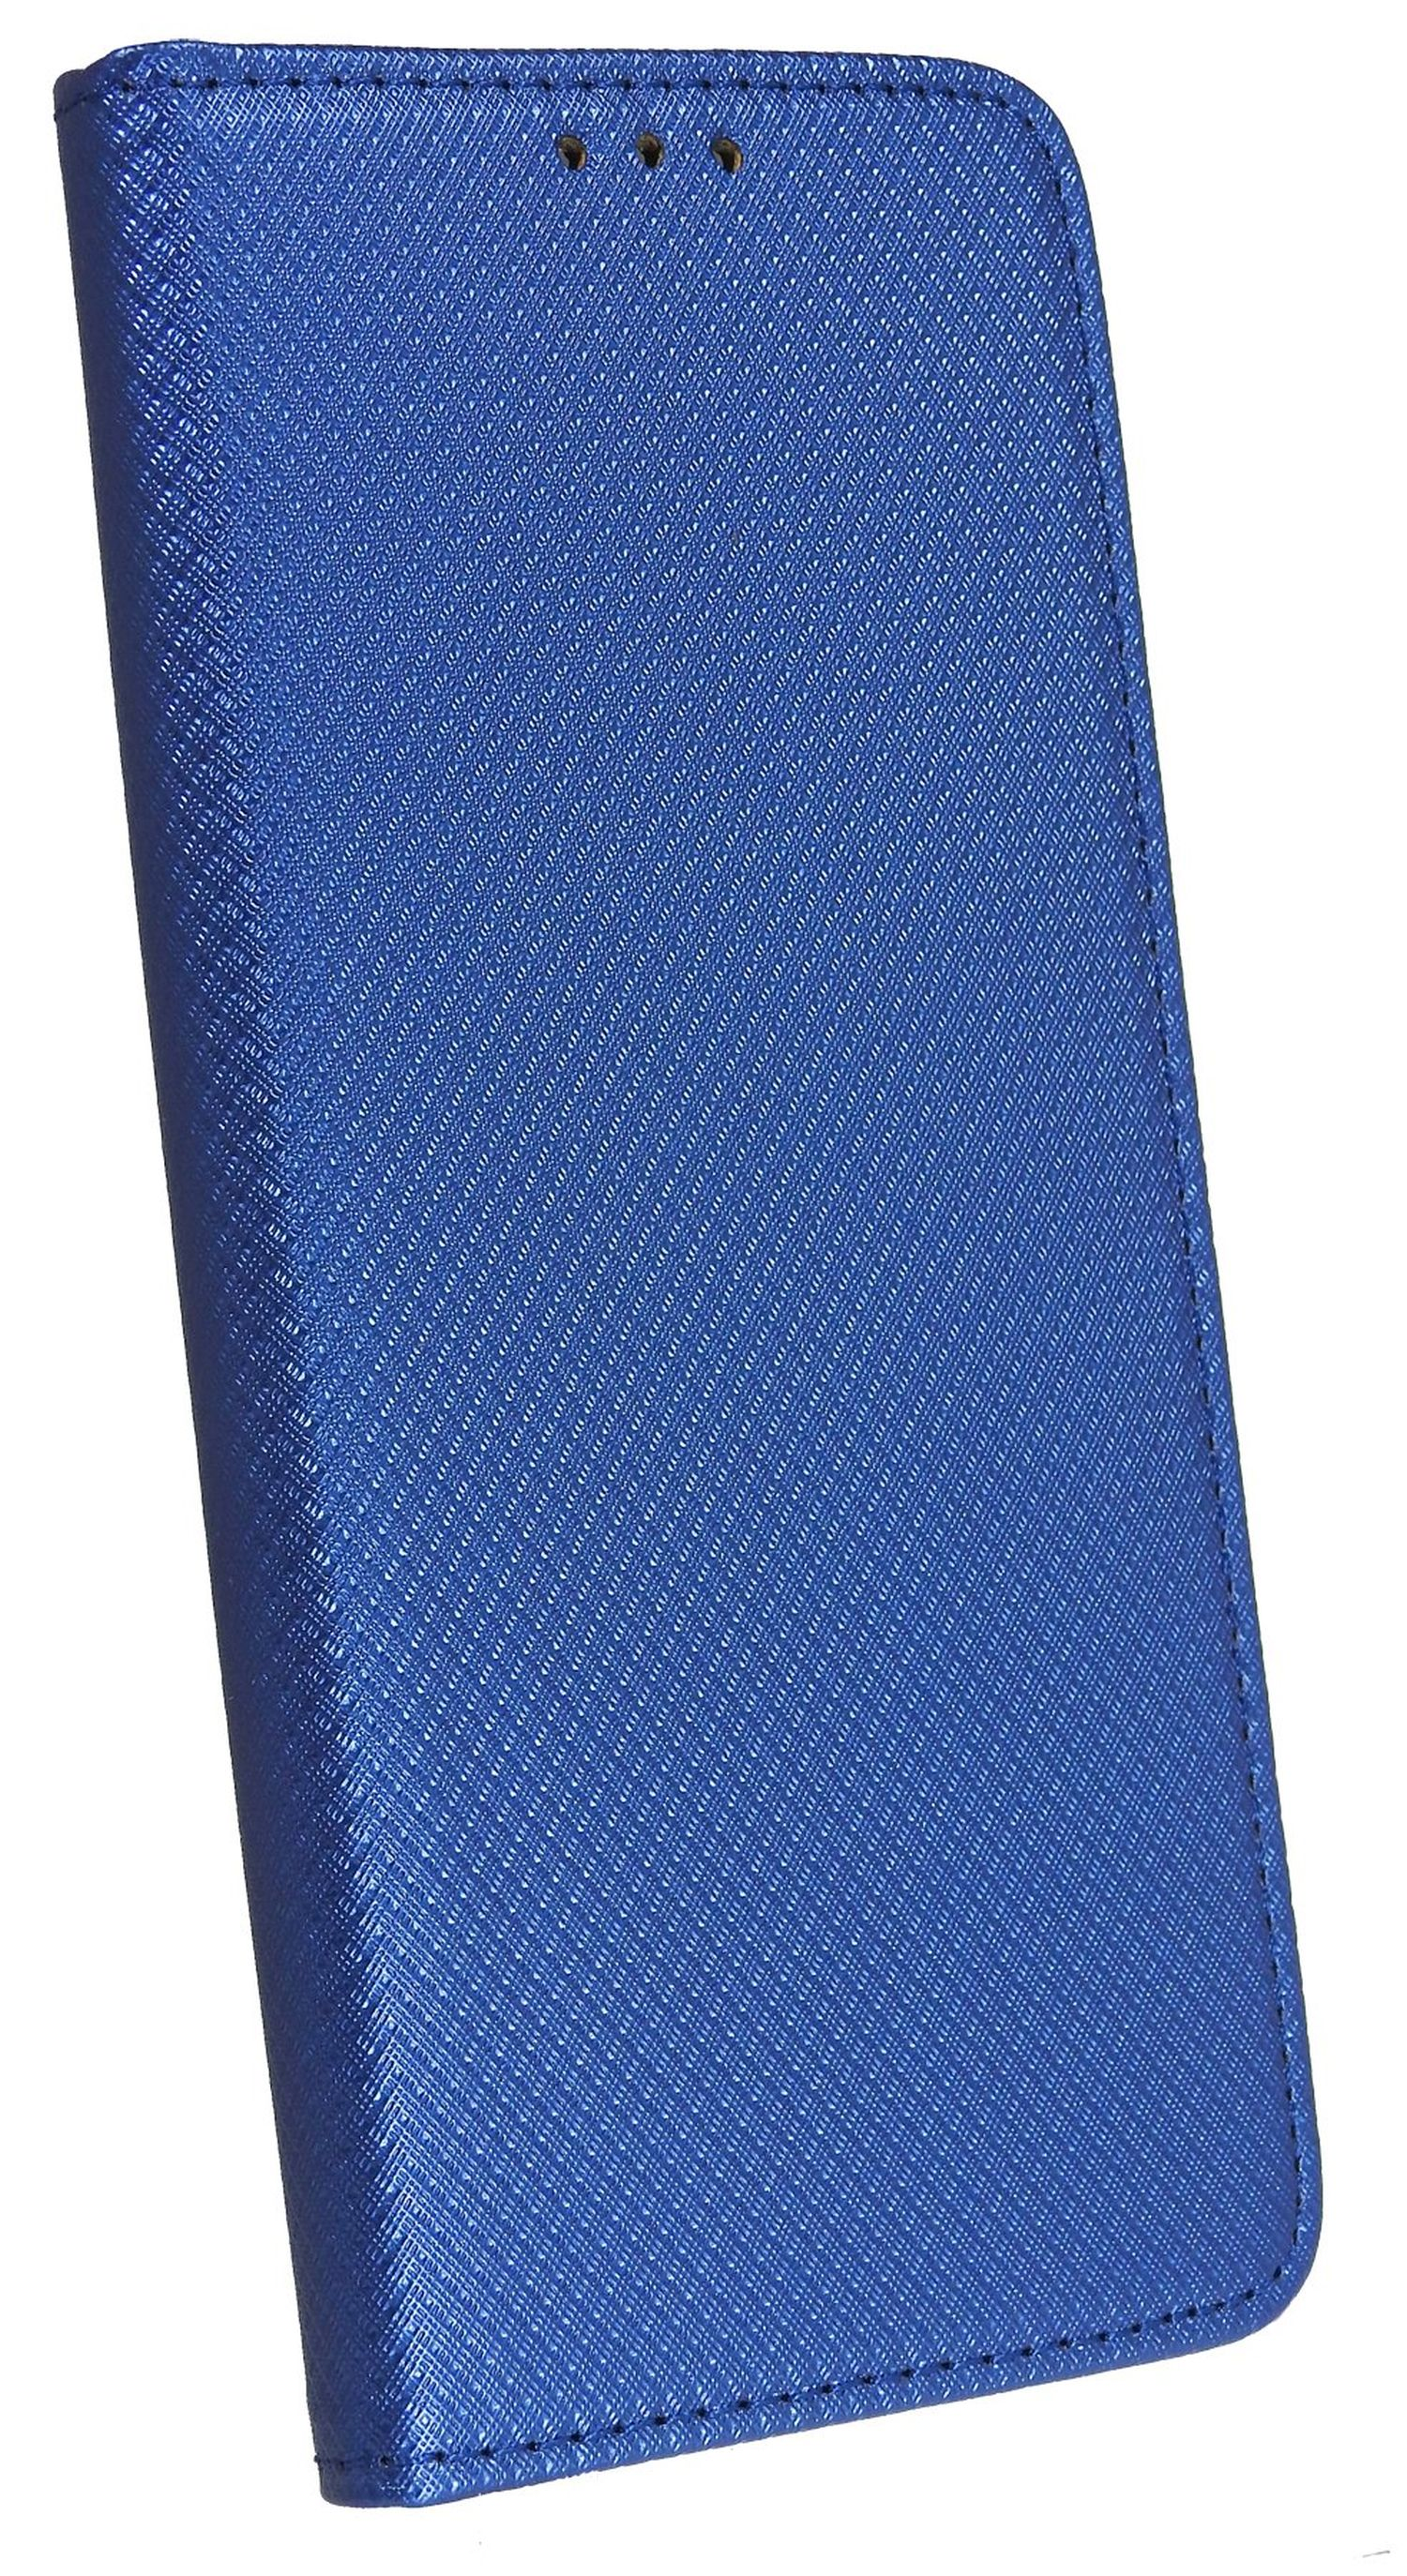 COFI Plus, Bookcover, G9 Smart Case, Moto Motorola, Blau